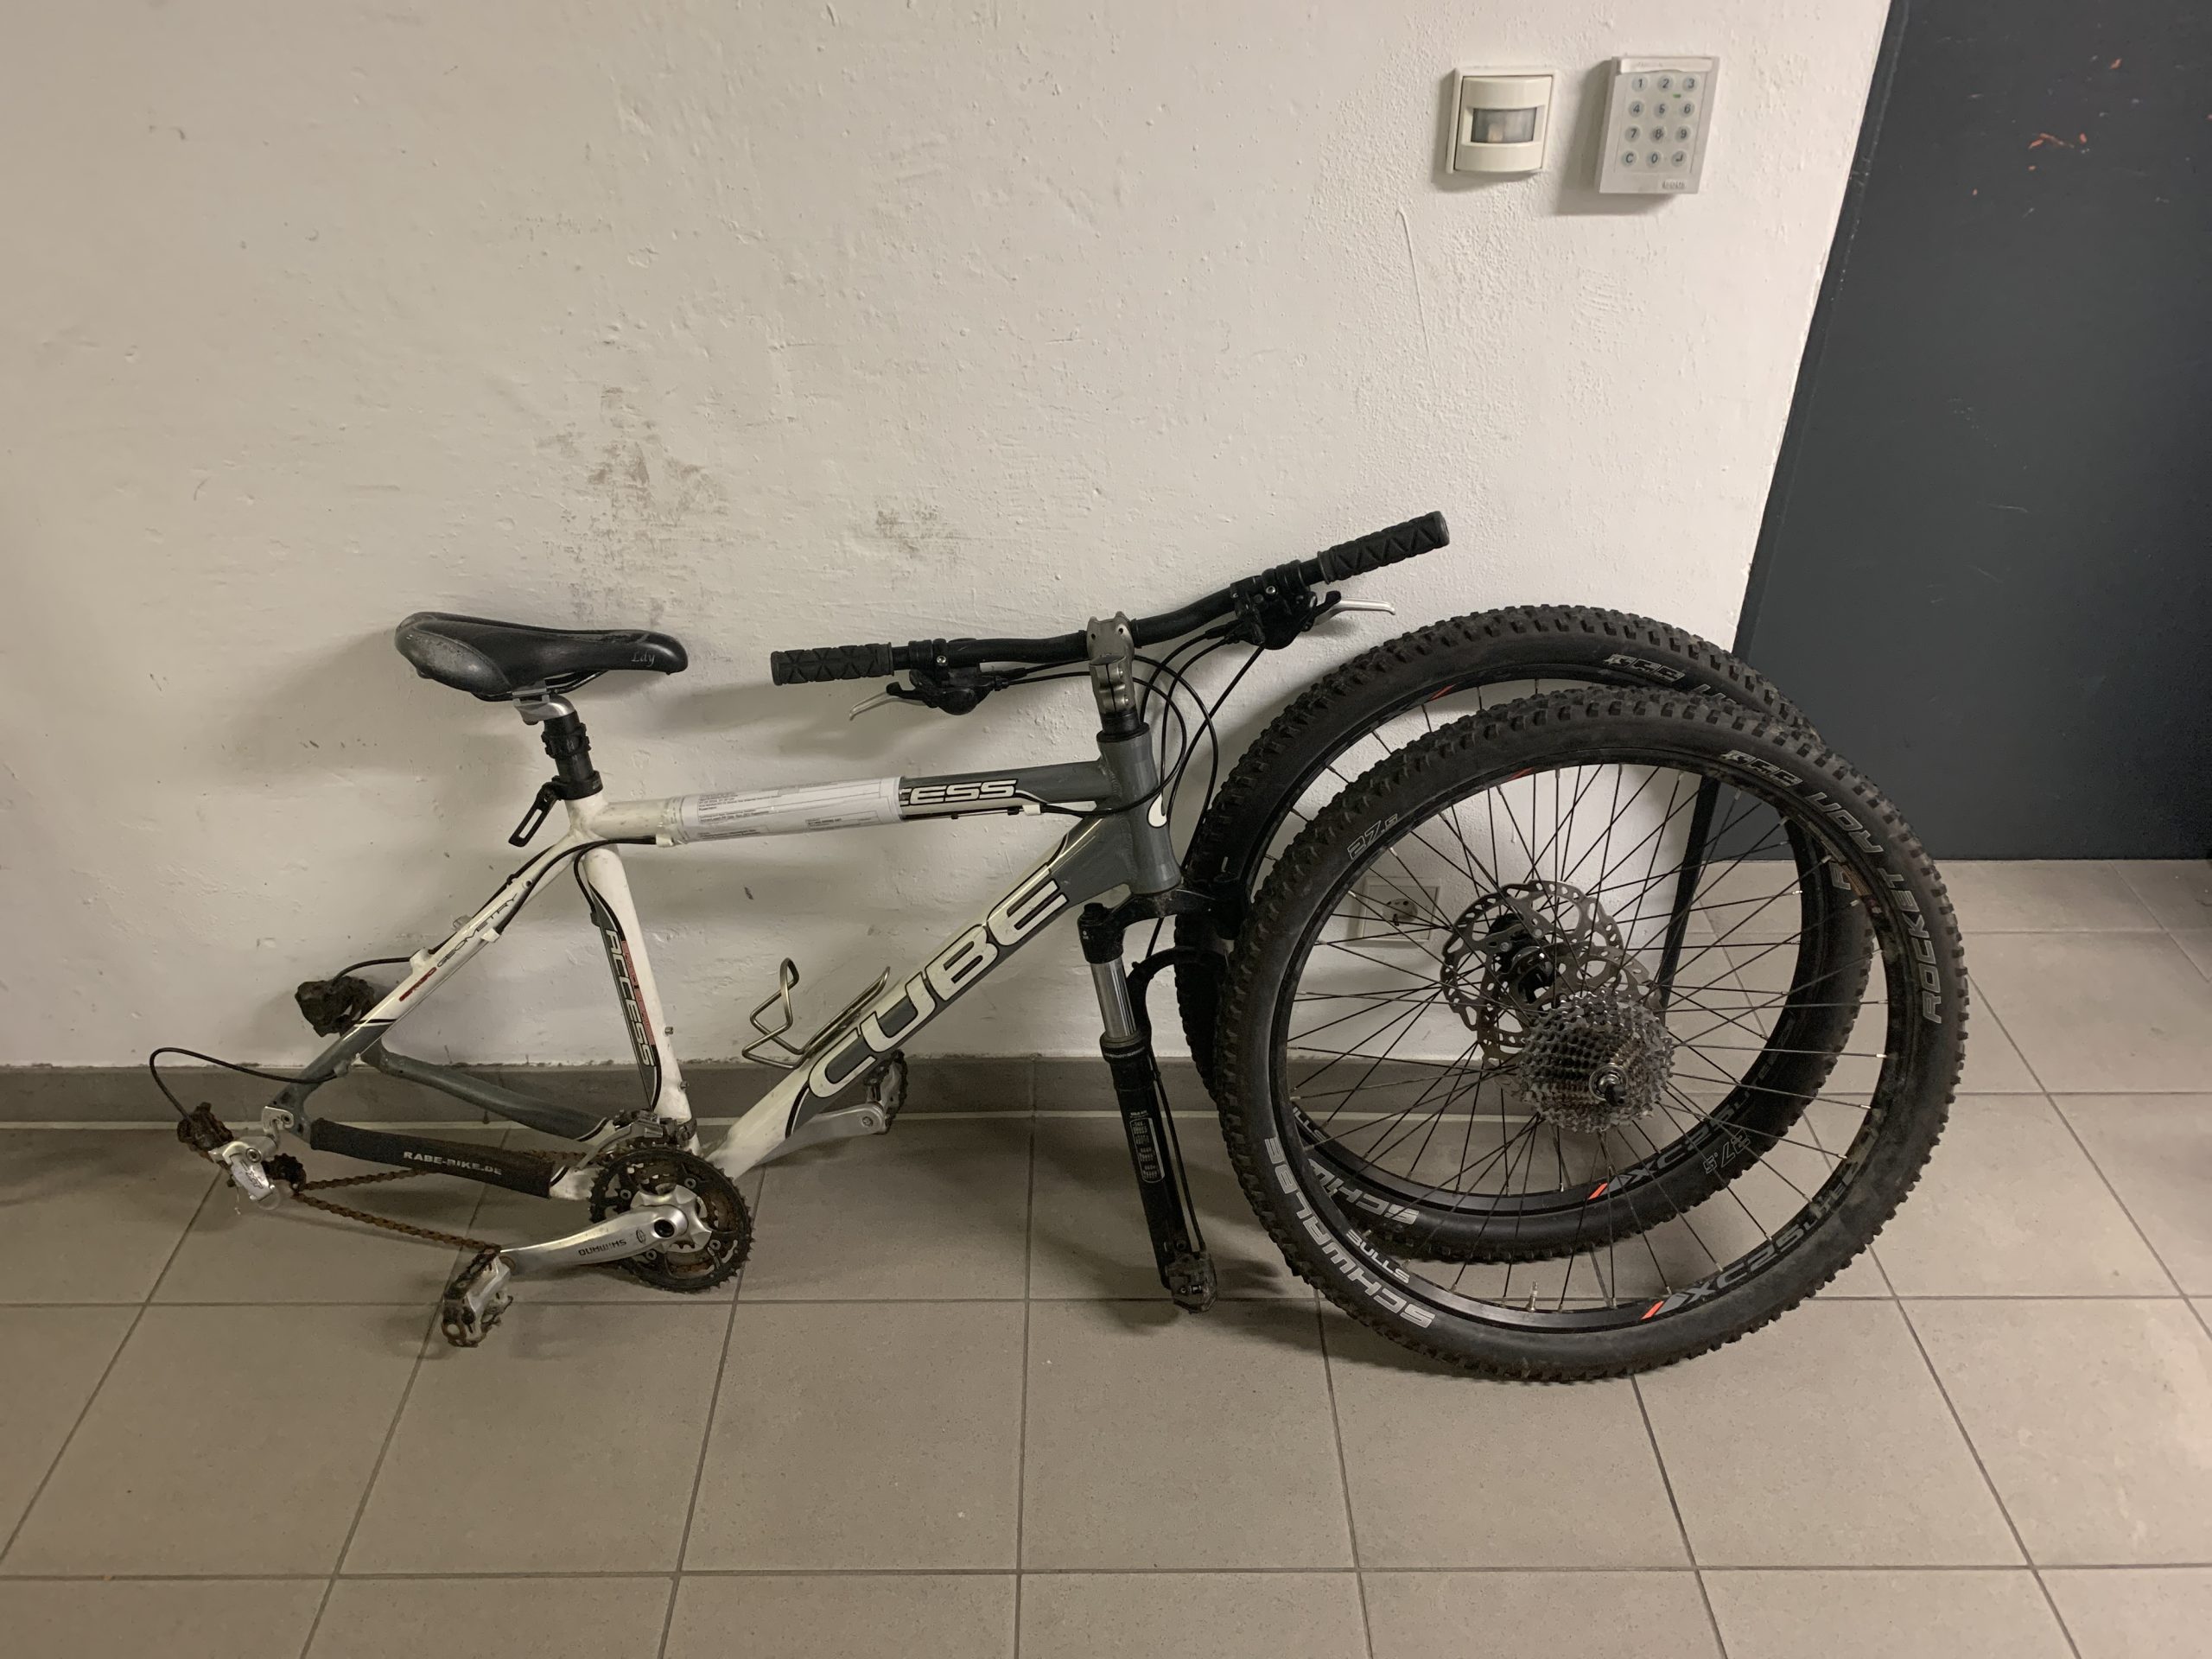 gestohlenes Fahrrad. Foto: Polizeiinspektion Rosenheim